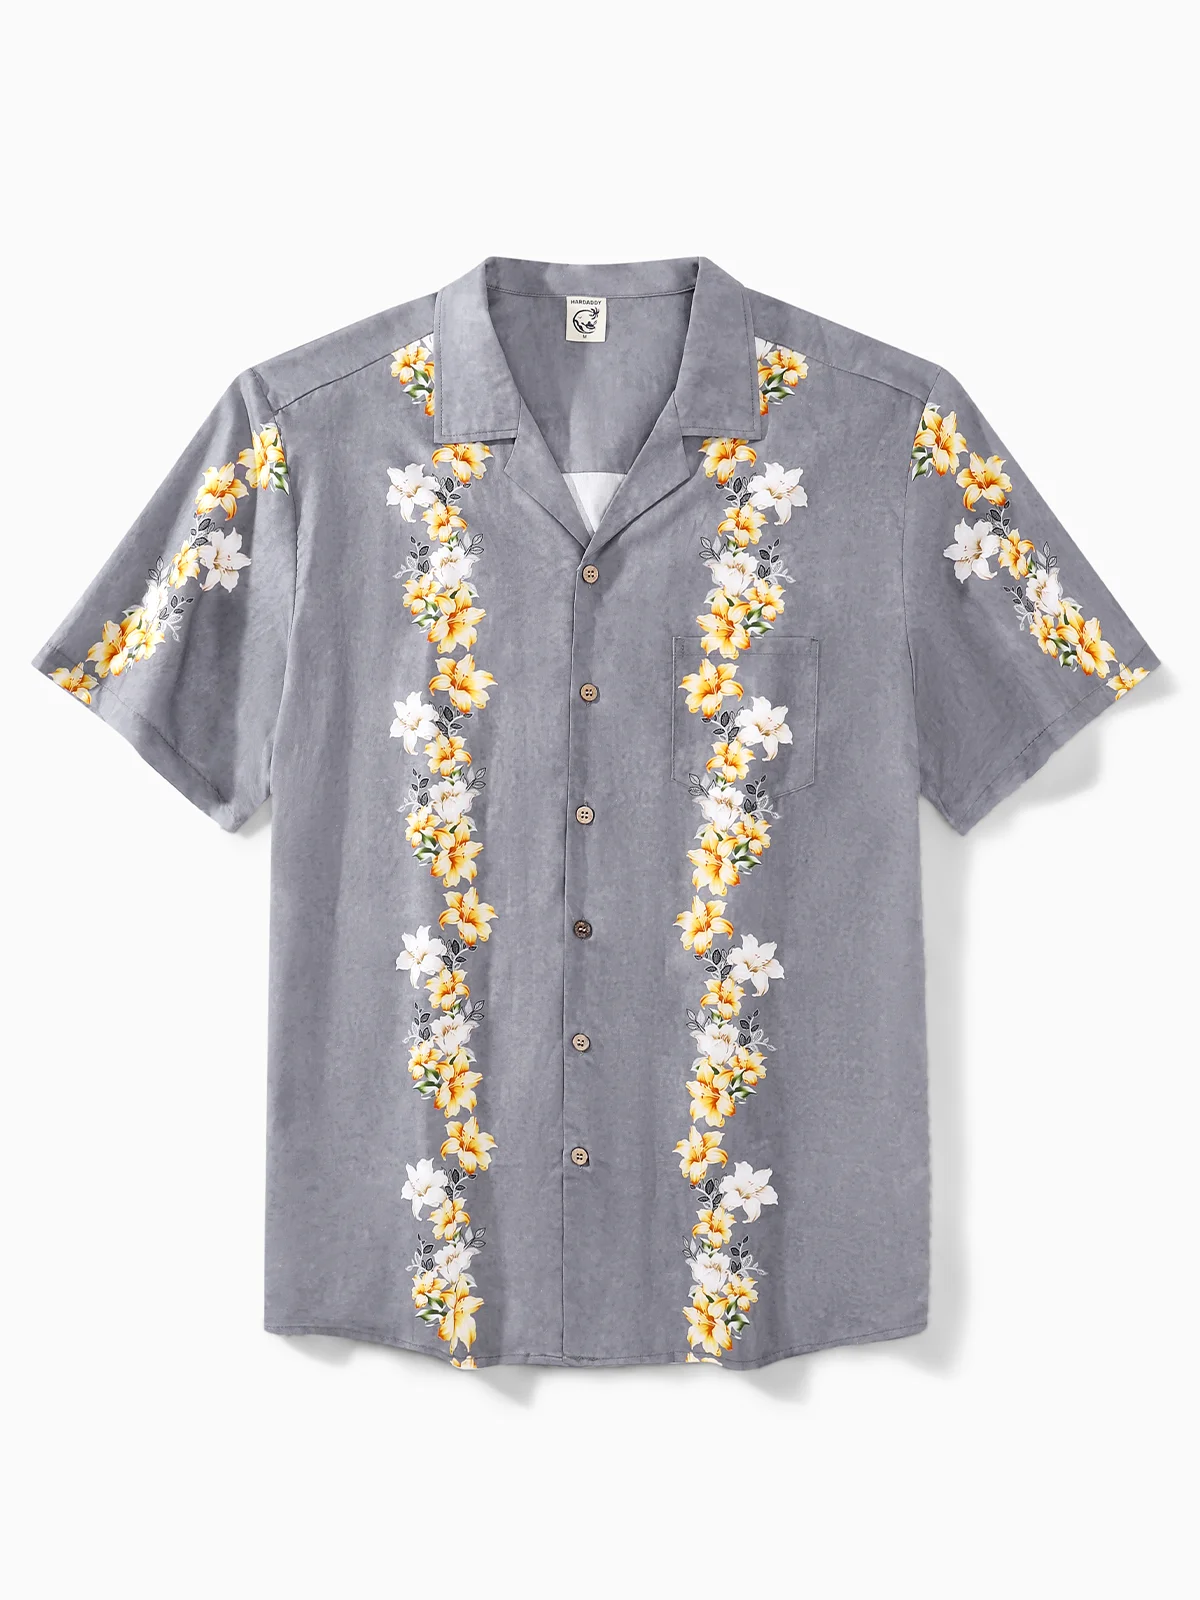 Hardaddy® Cotton Plants Aloha Shirt